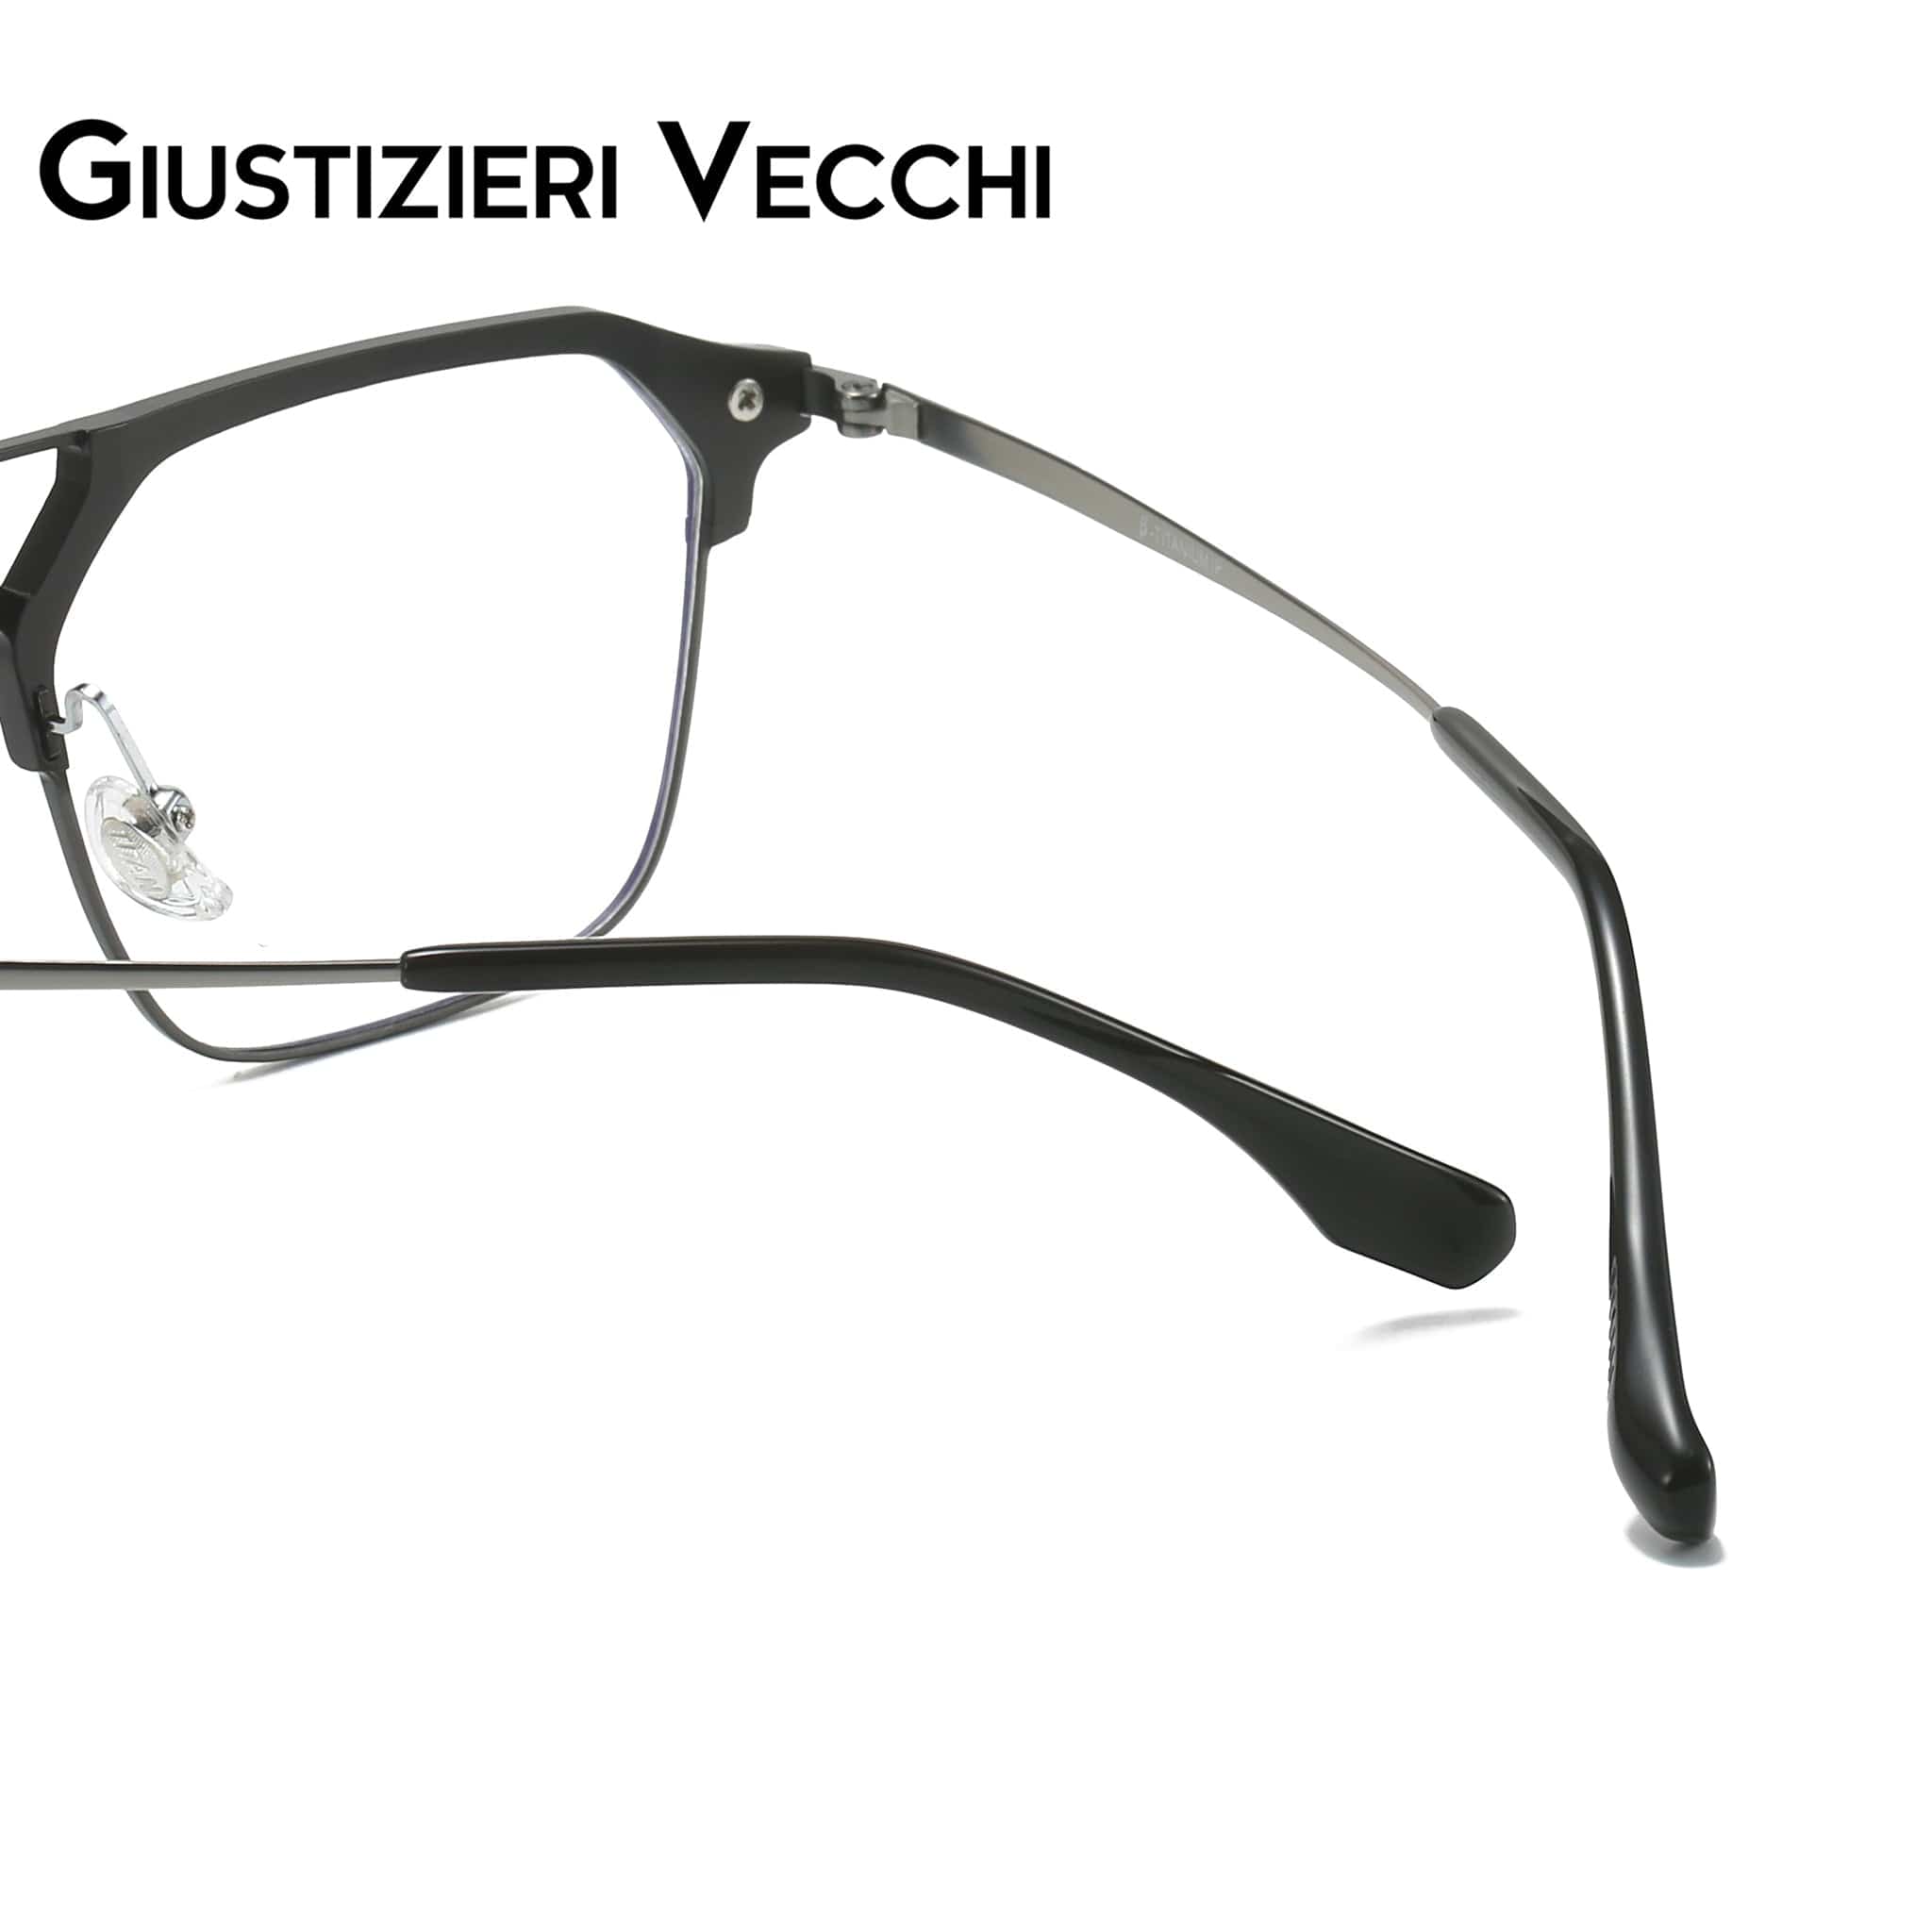 GIUSTIZIERI VECCHI Eyeglasses IceBlast Uno